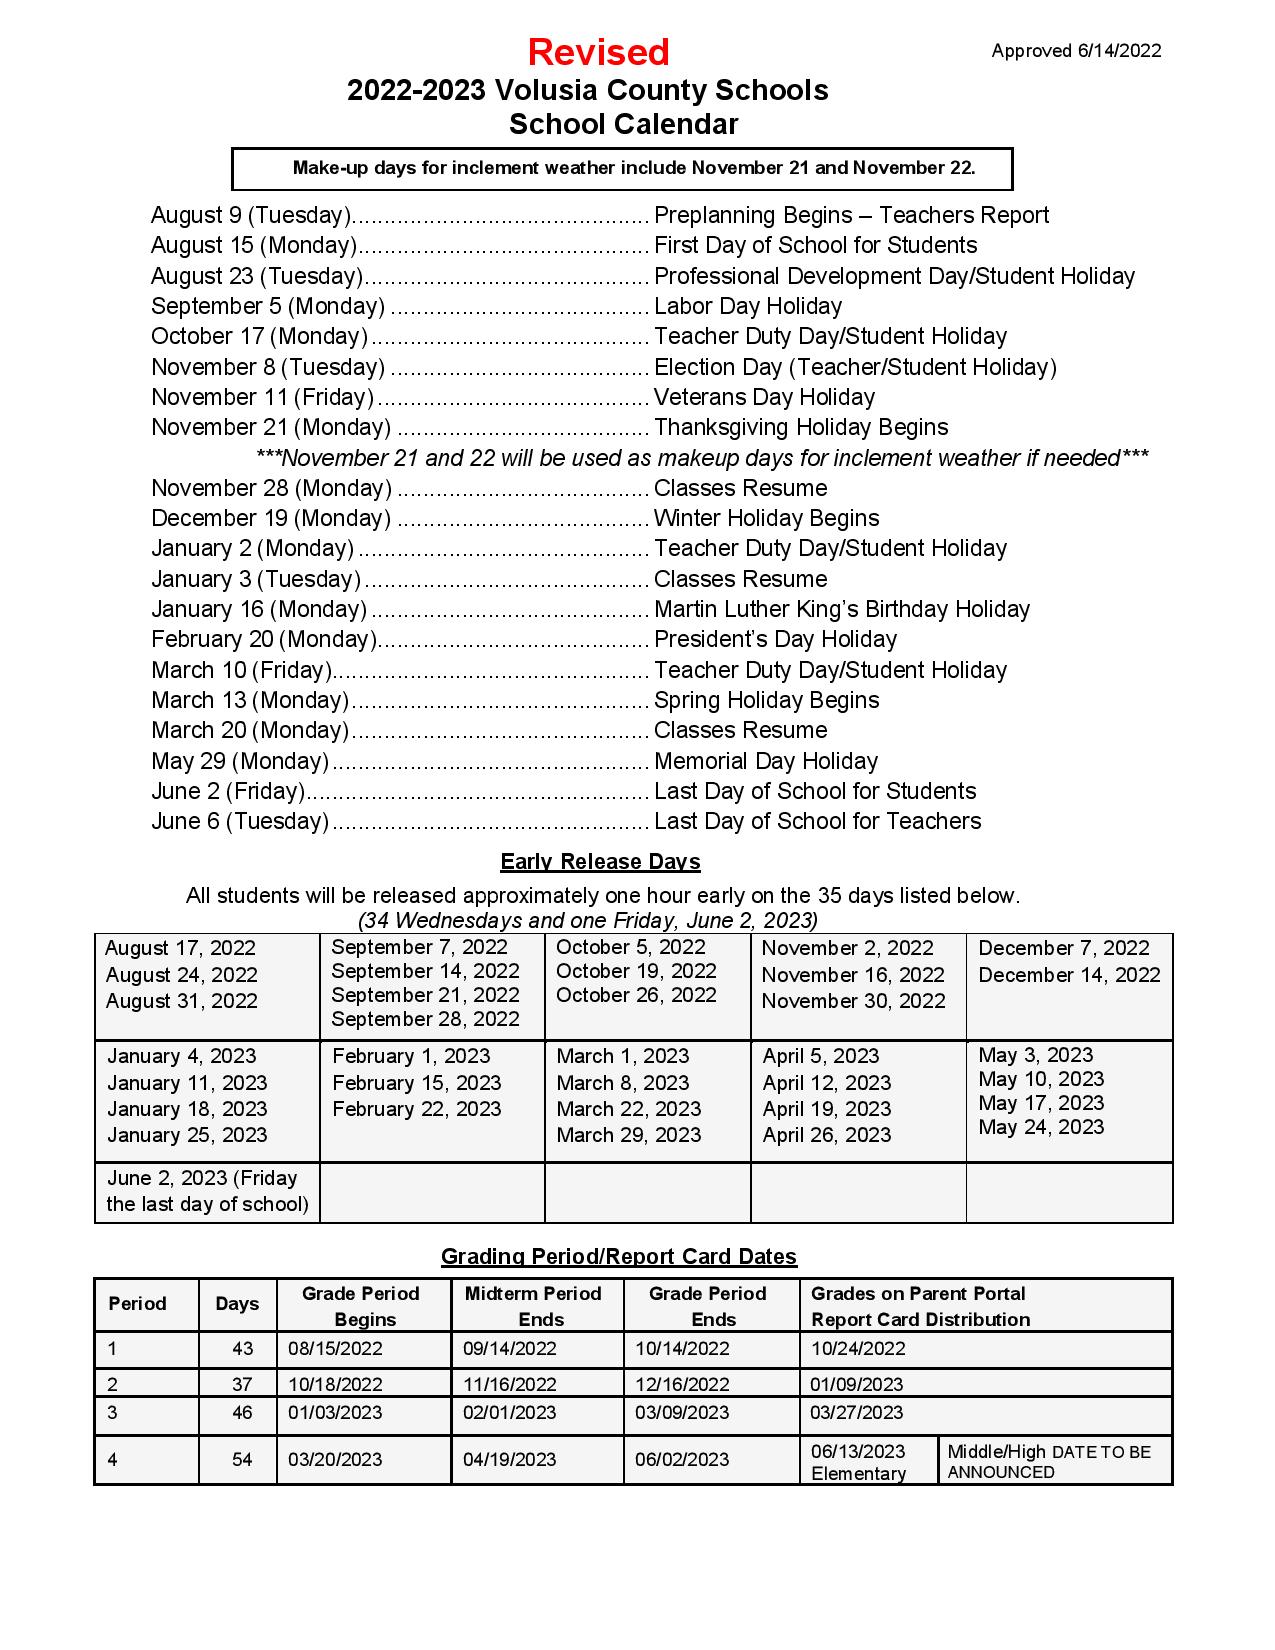 volusia-county-schools-calendar-holidays-2022-2023-pdf